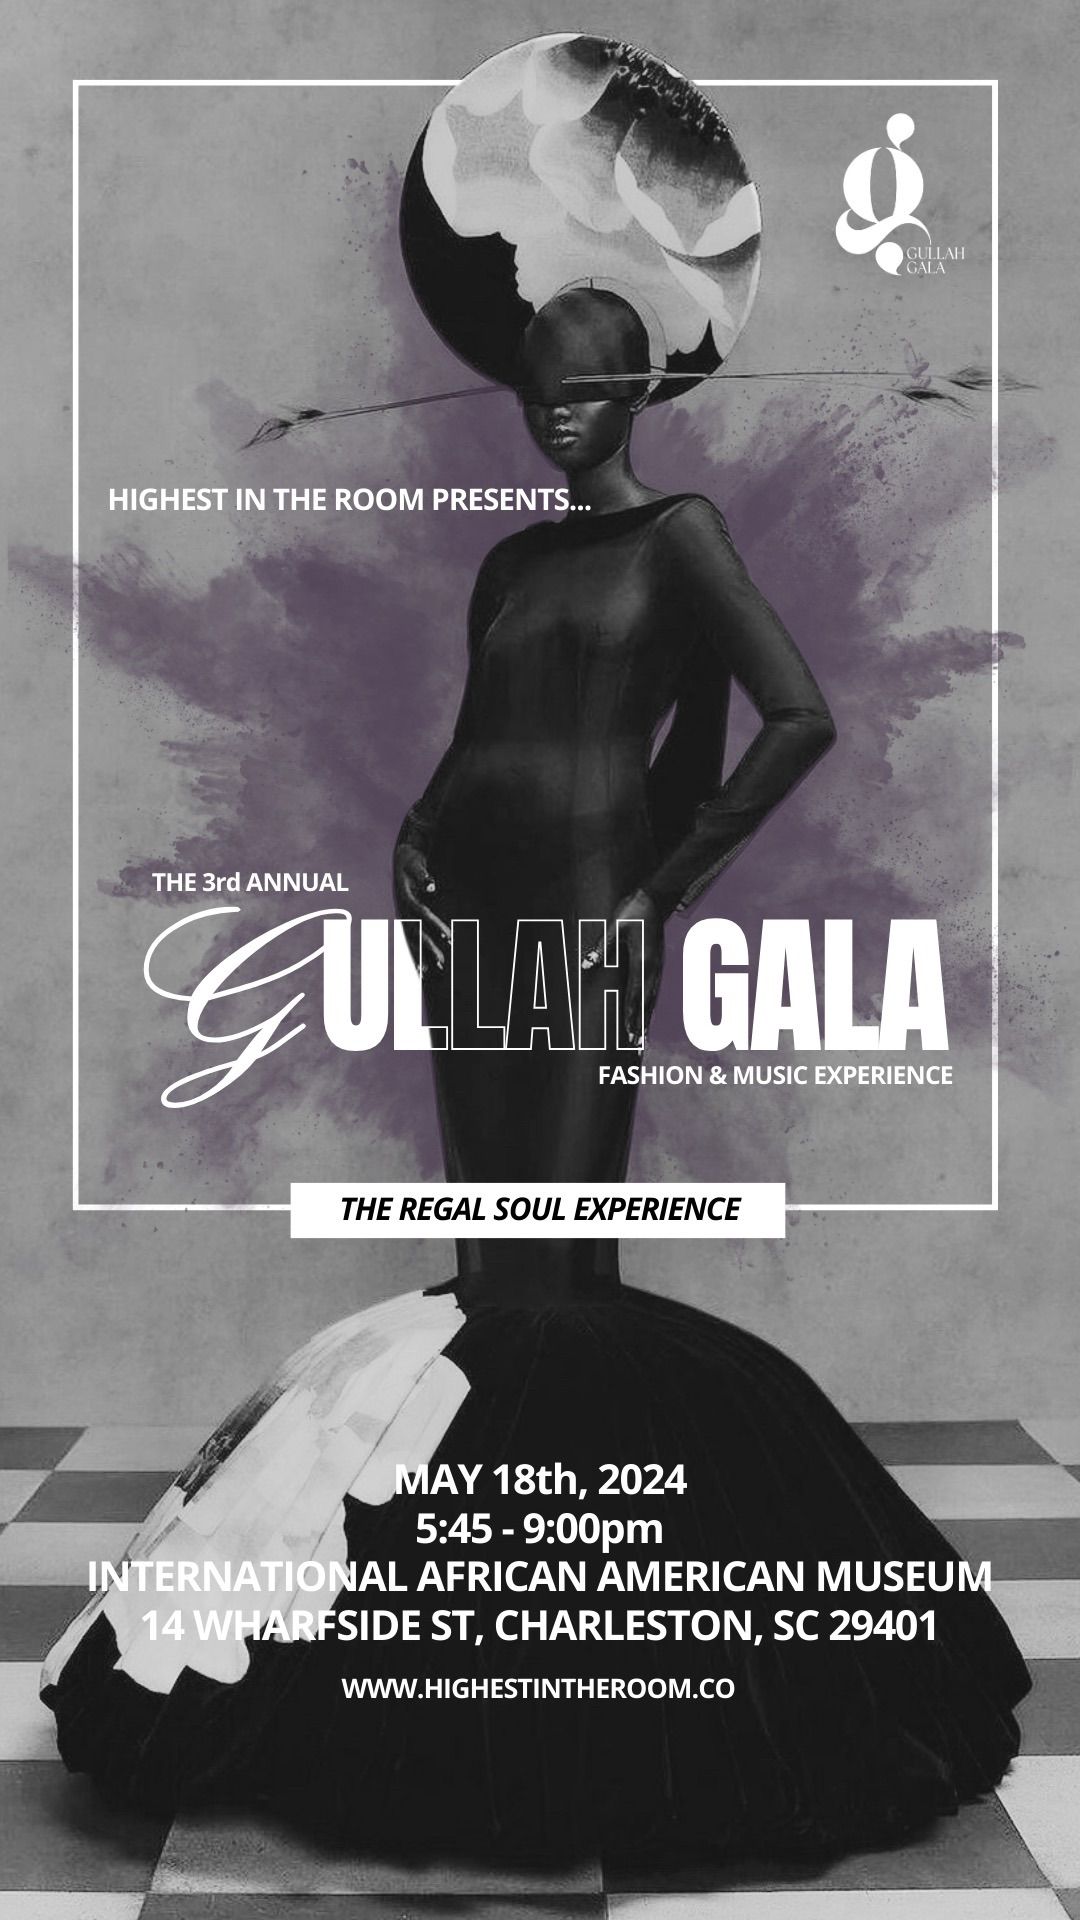 Gullah Gala Fashion & Music Experience 